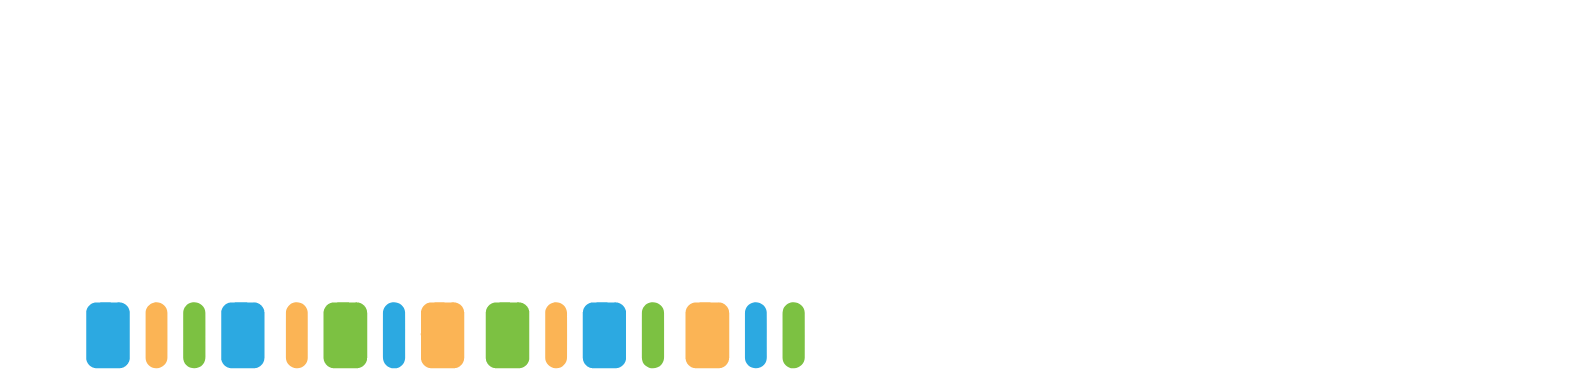 Taysha Gene Therapies logo large for dark backgrounds (transparent PNG)